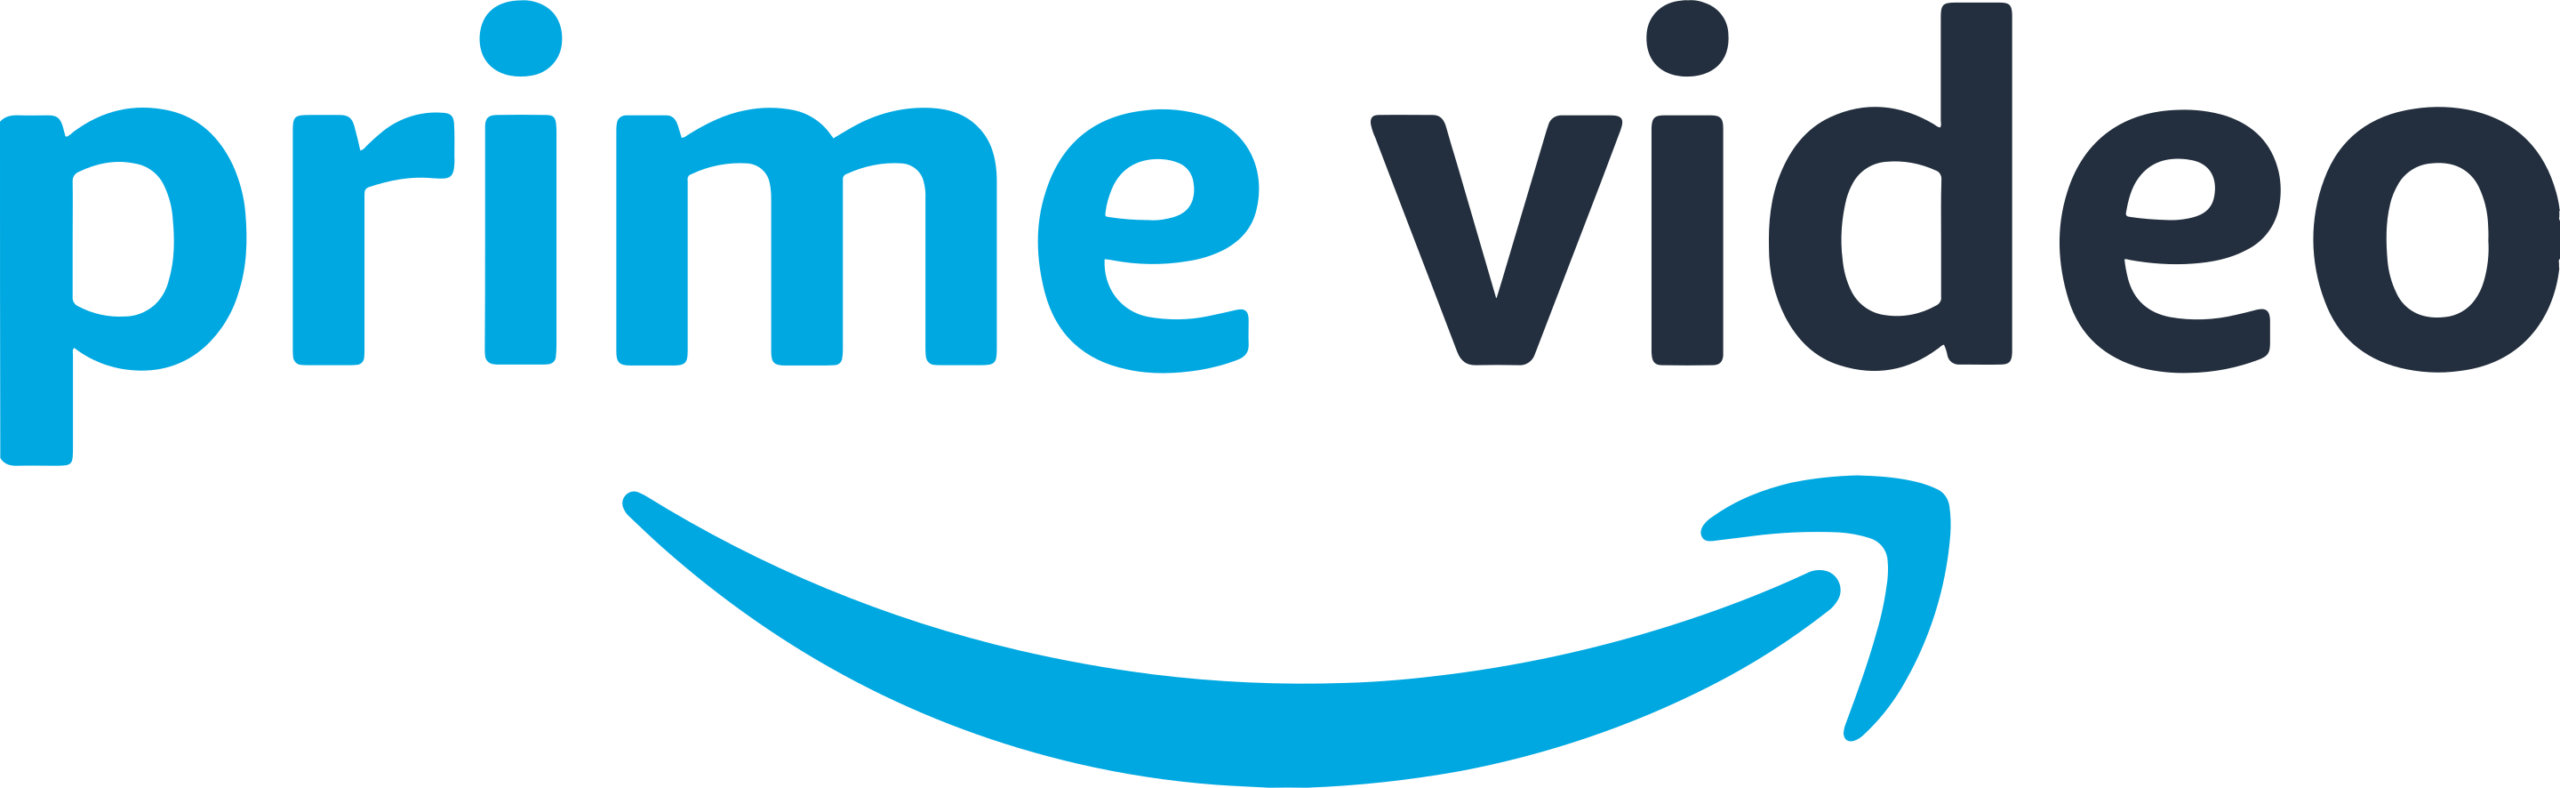 Amazon_Prime_Video_logo.svg-scaled